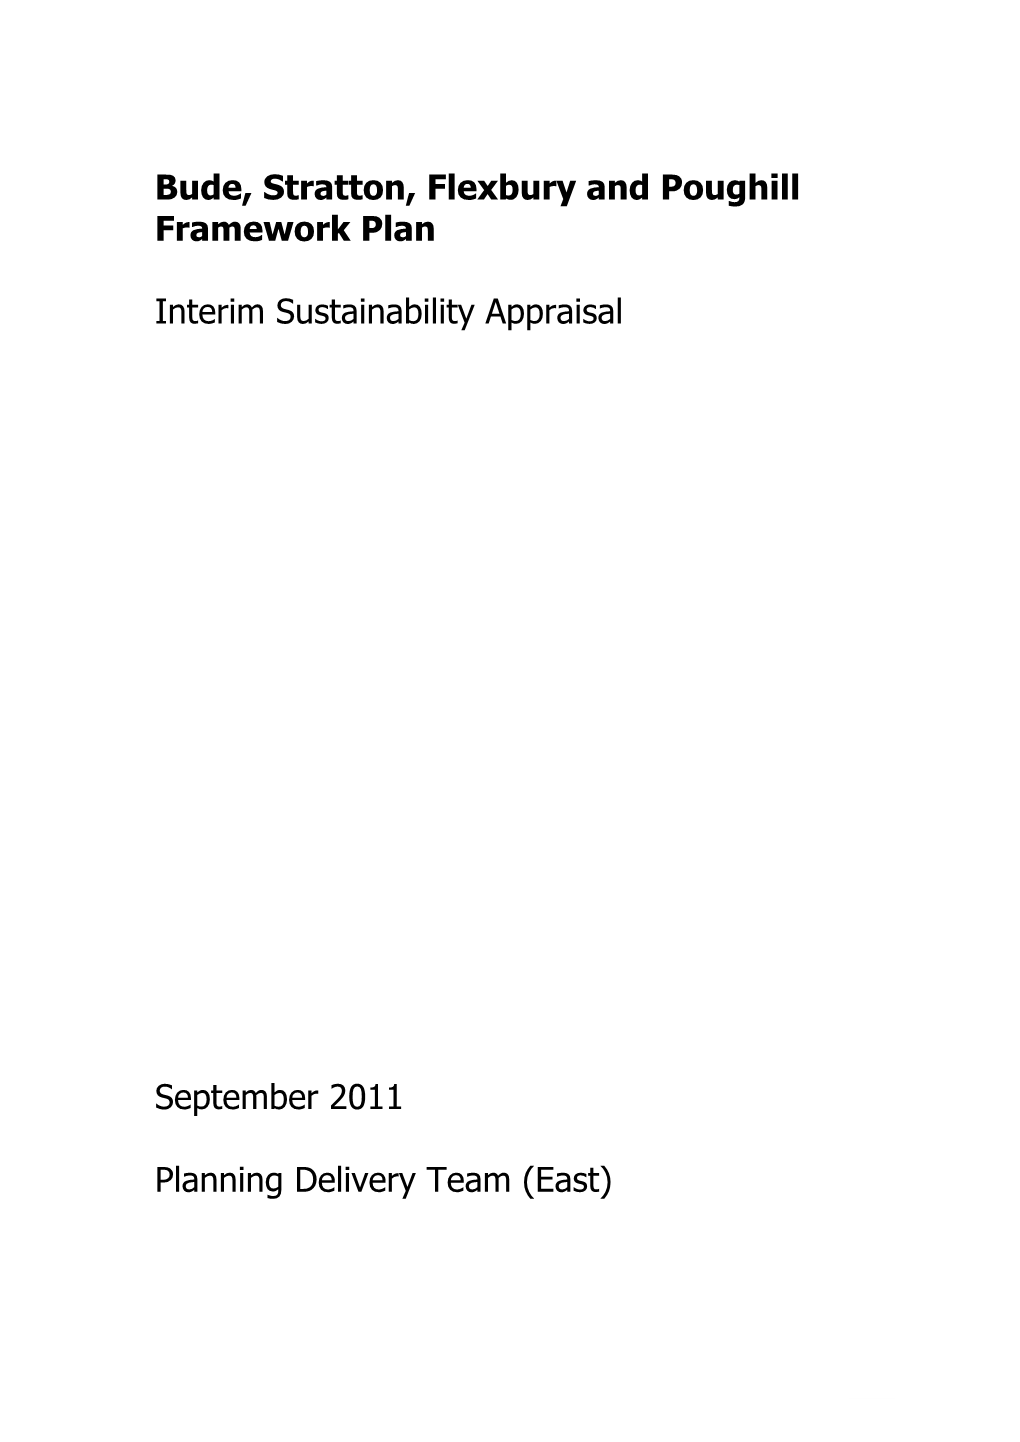 Bude, Stratton, Flexbury and Poughill Framework Plan